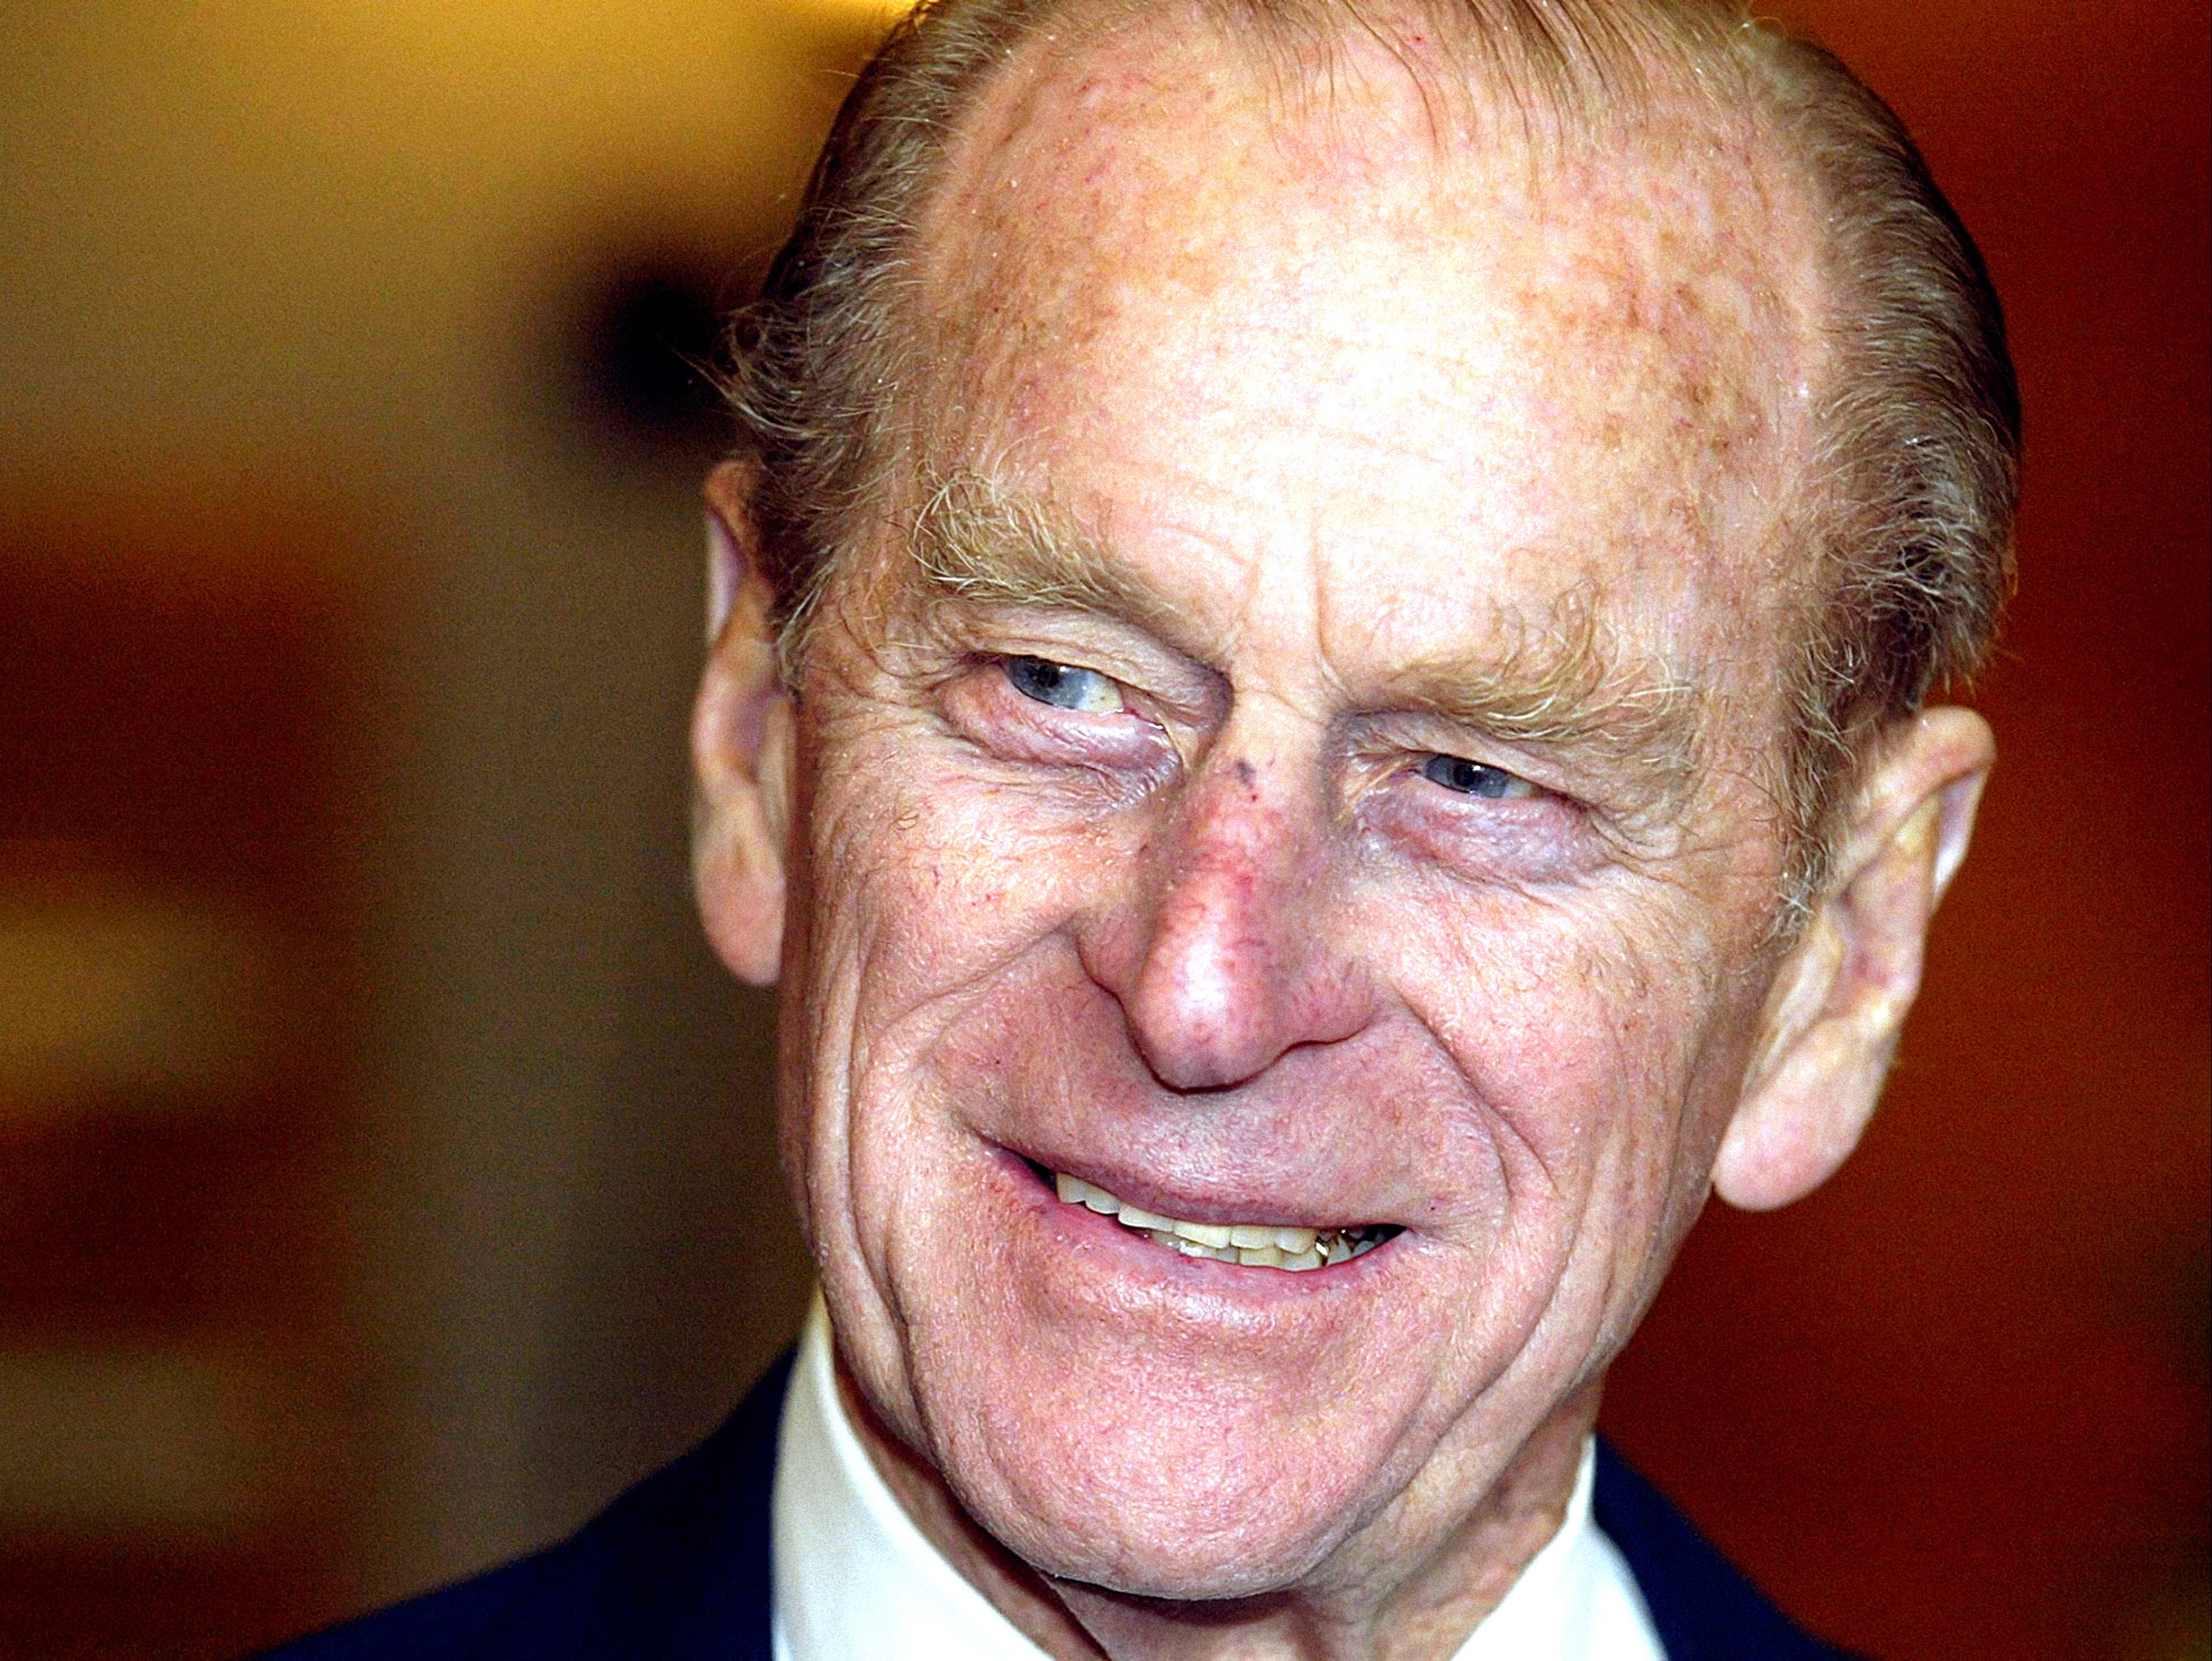 Prince Philip, Duke of Edinburgh, died at age 99 on 9 April, 2021